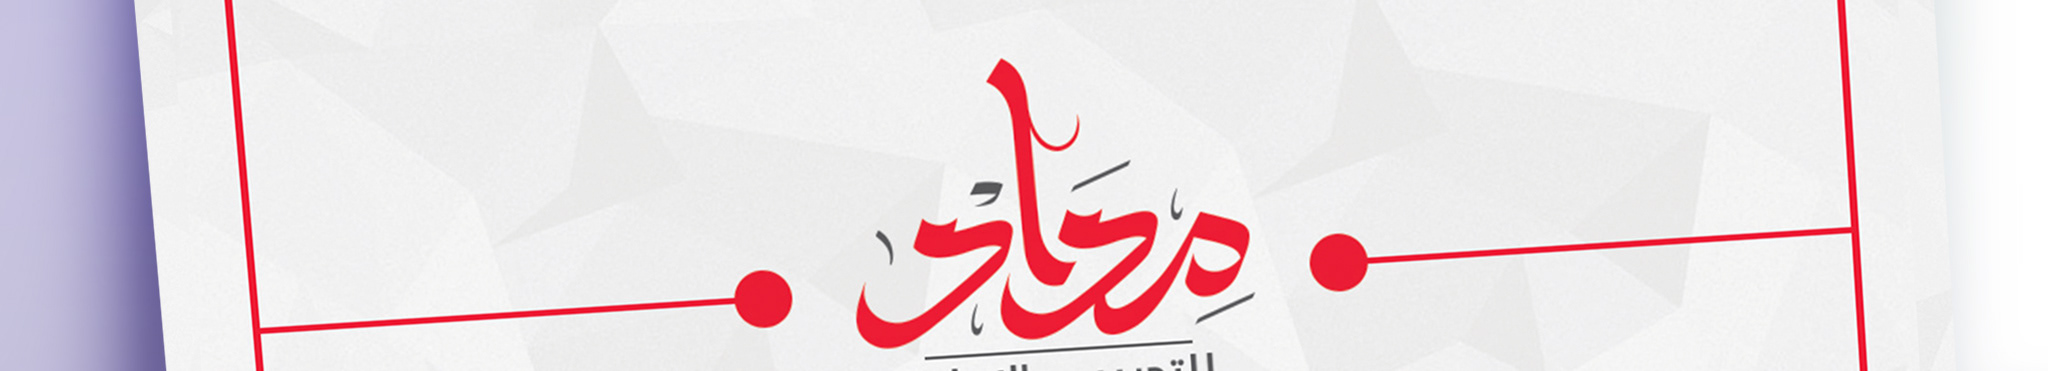 Medad Fonts & Advertising's profile banner